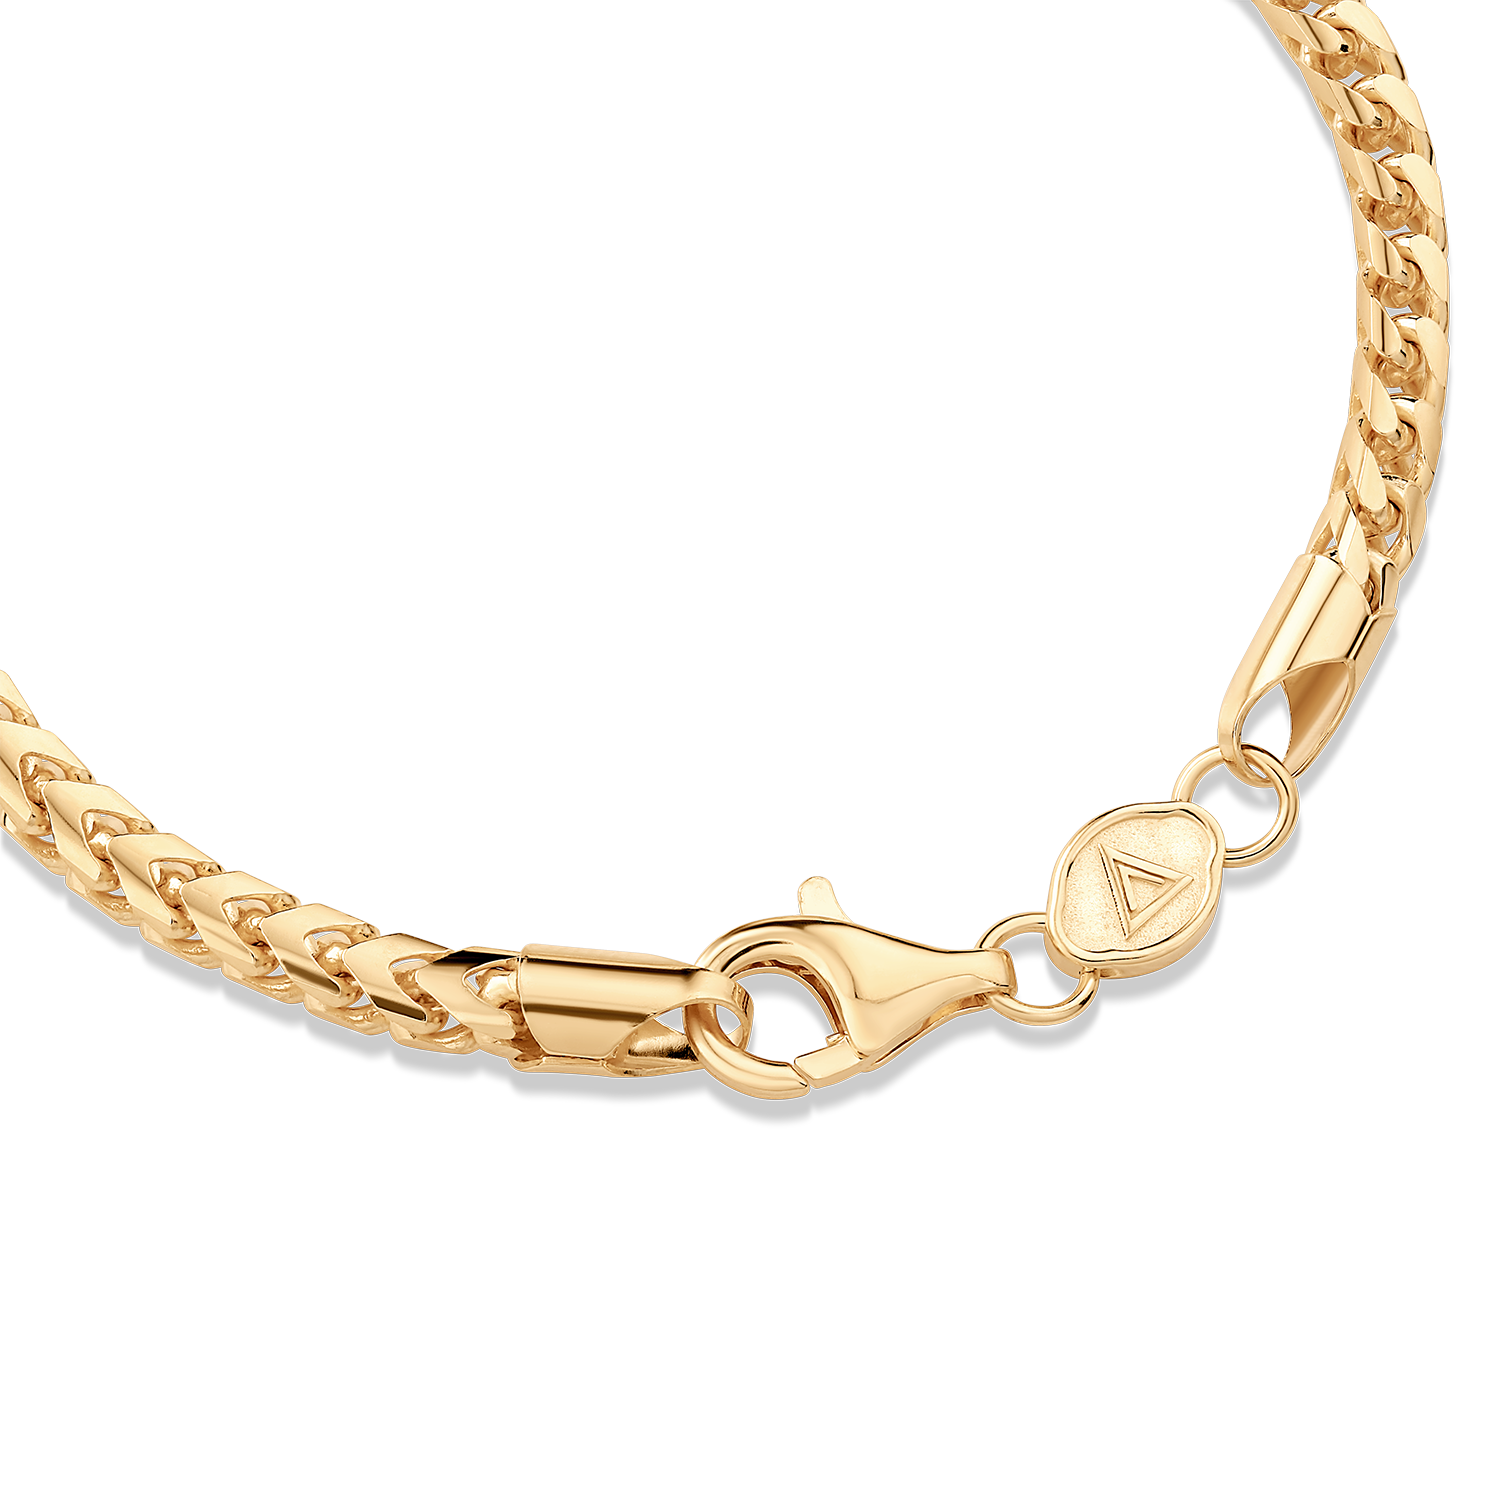 Cuban Link Chain 14K Gold Plated Curb Bracelet 8.5